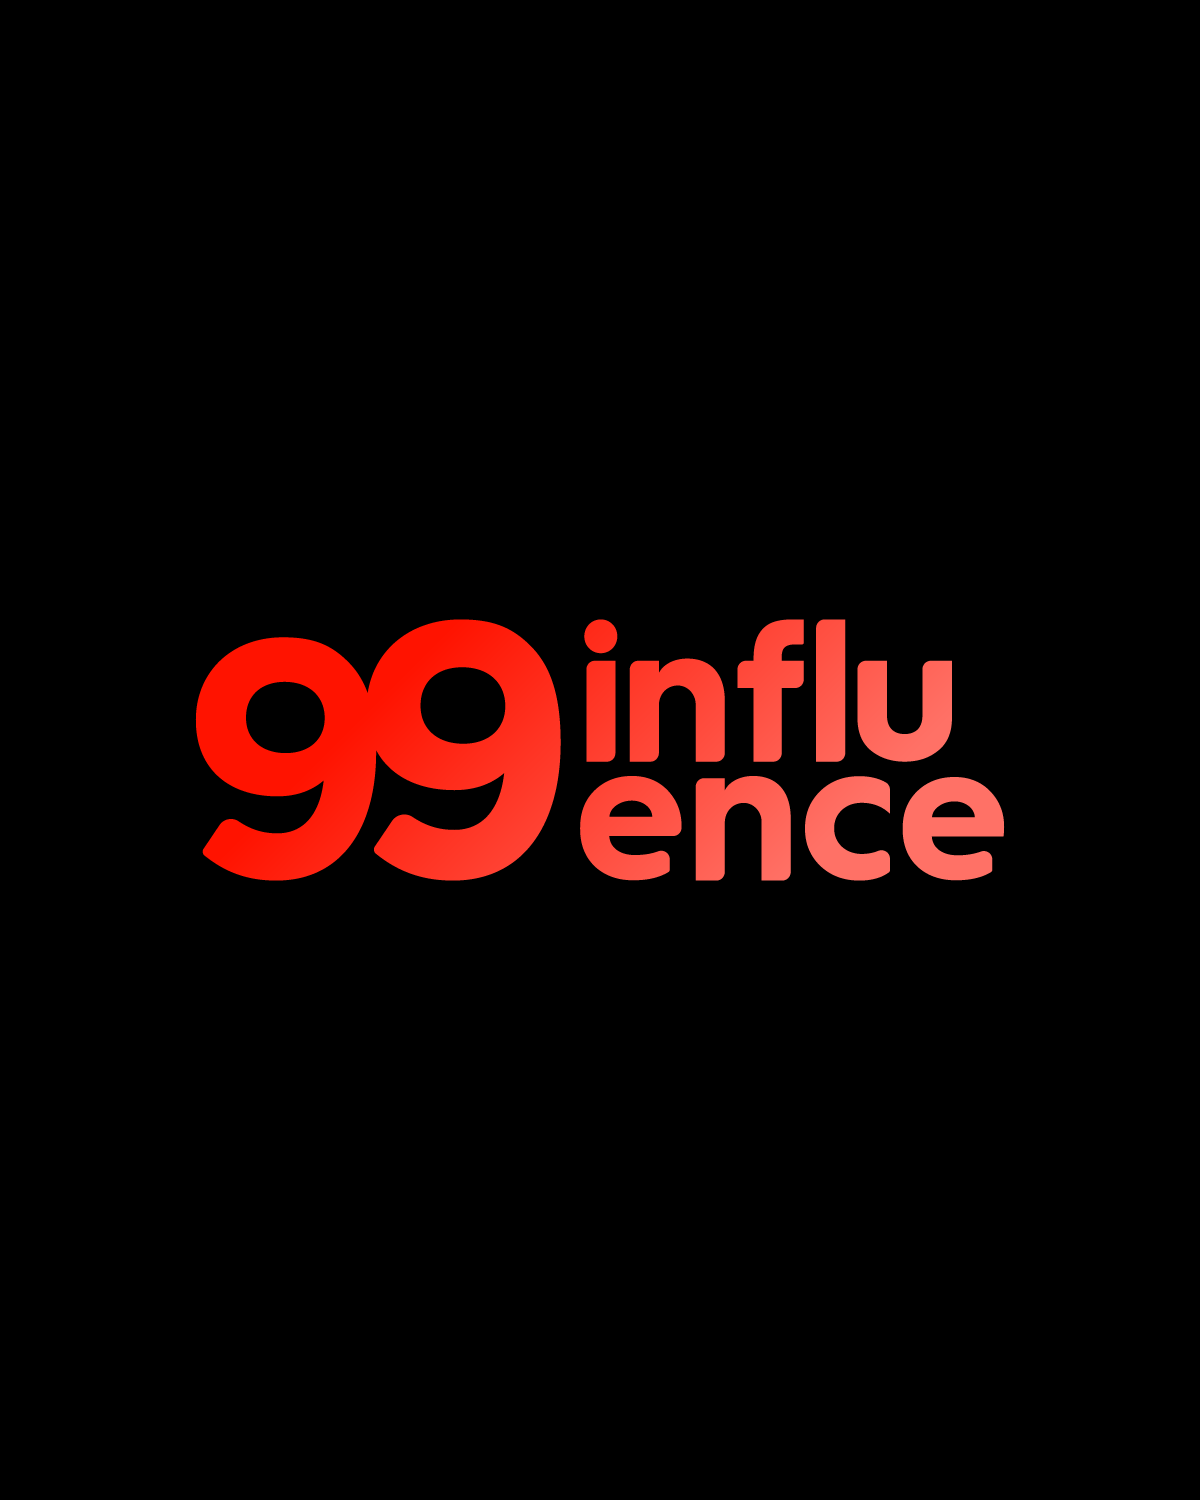 99influence